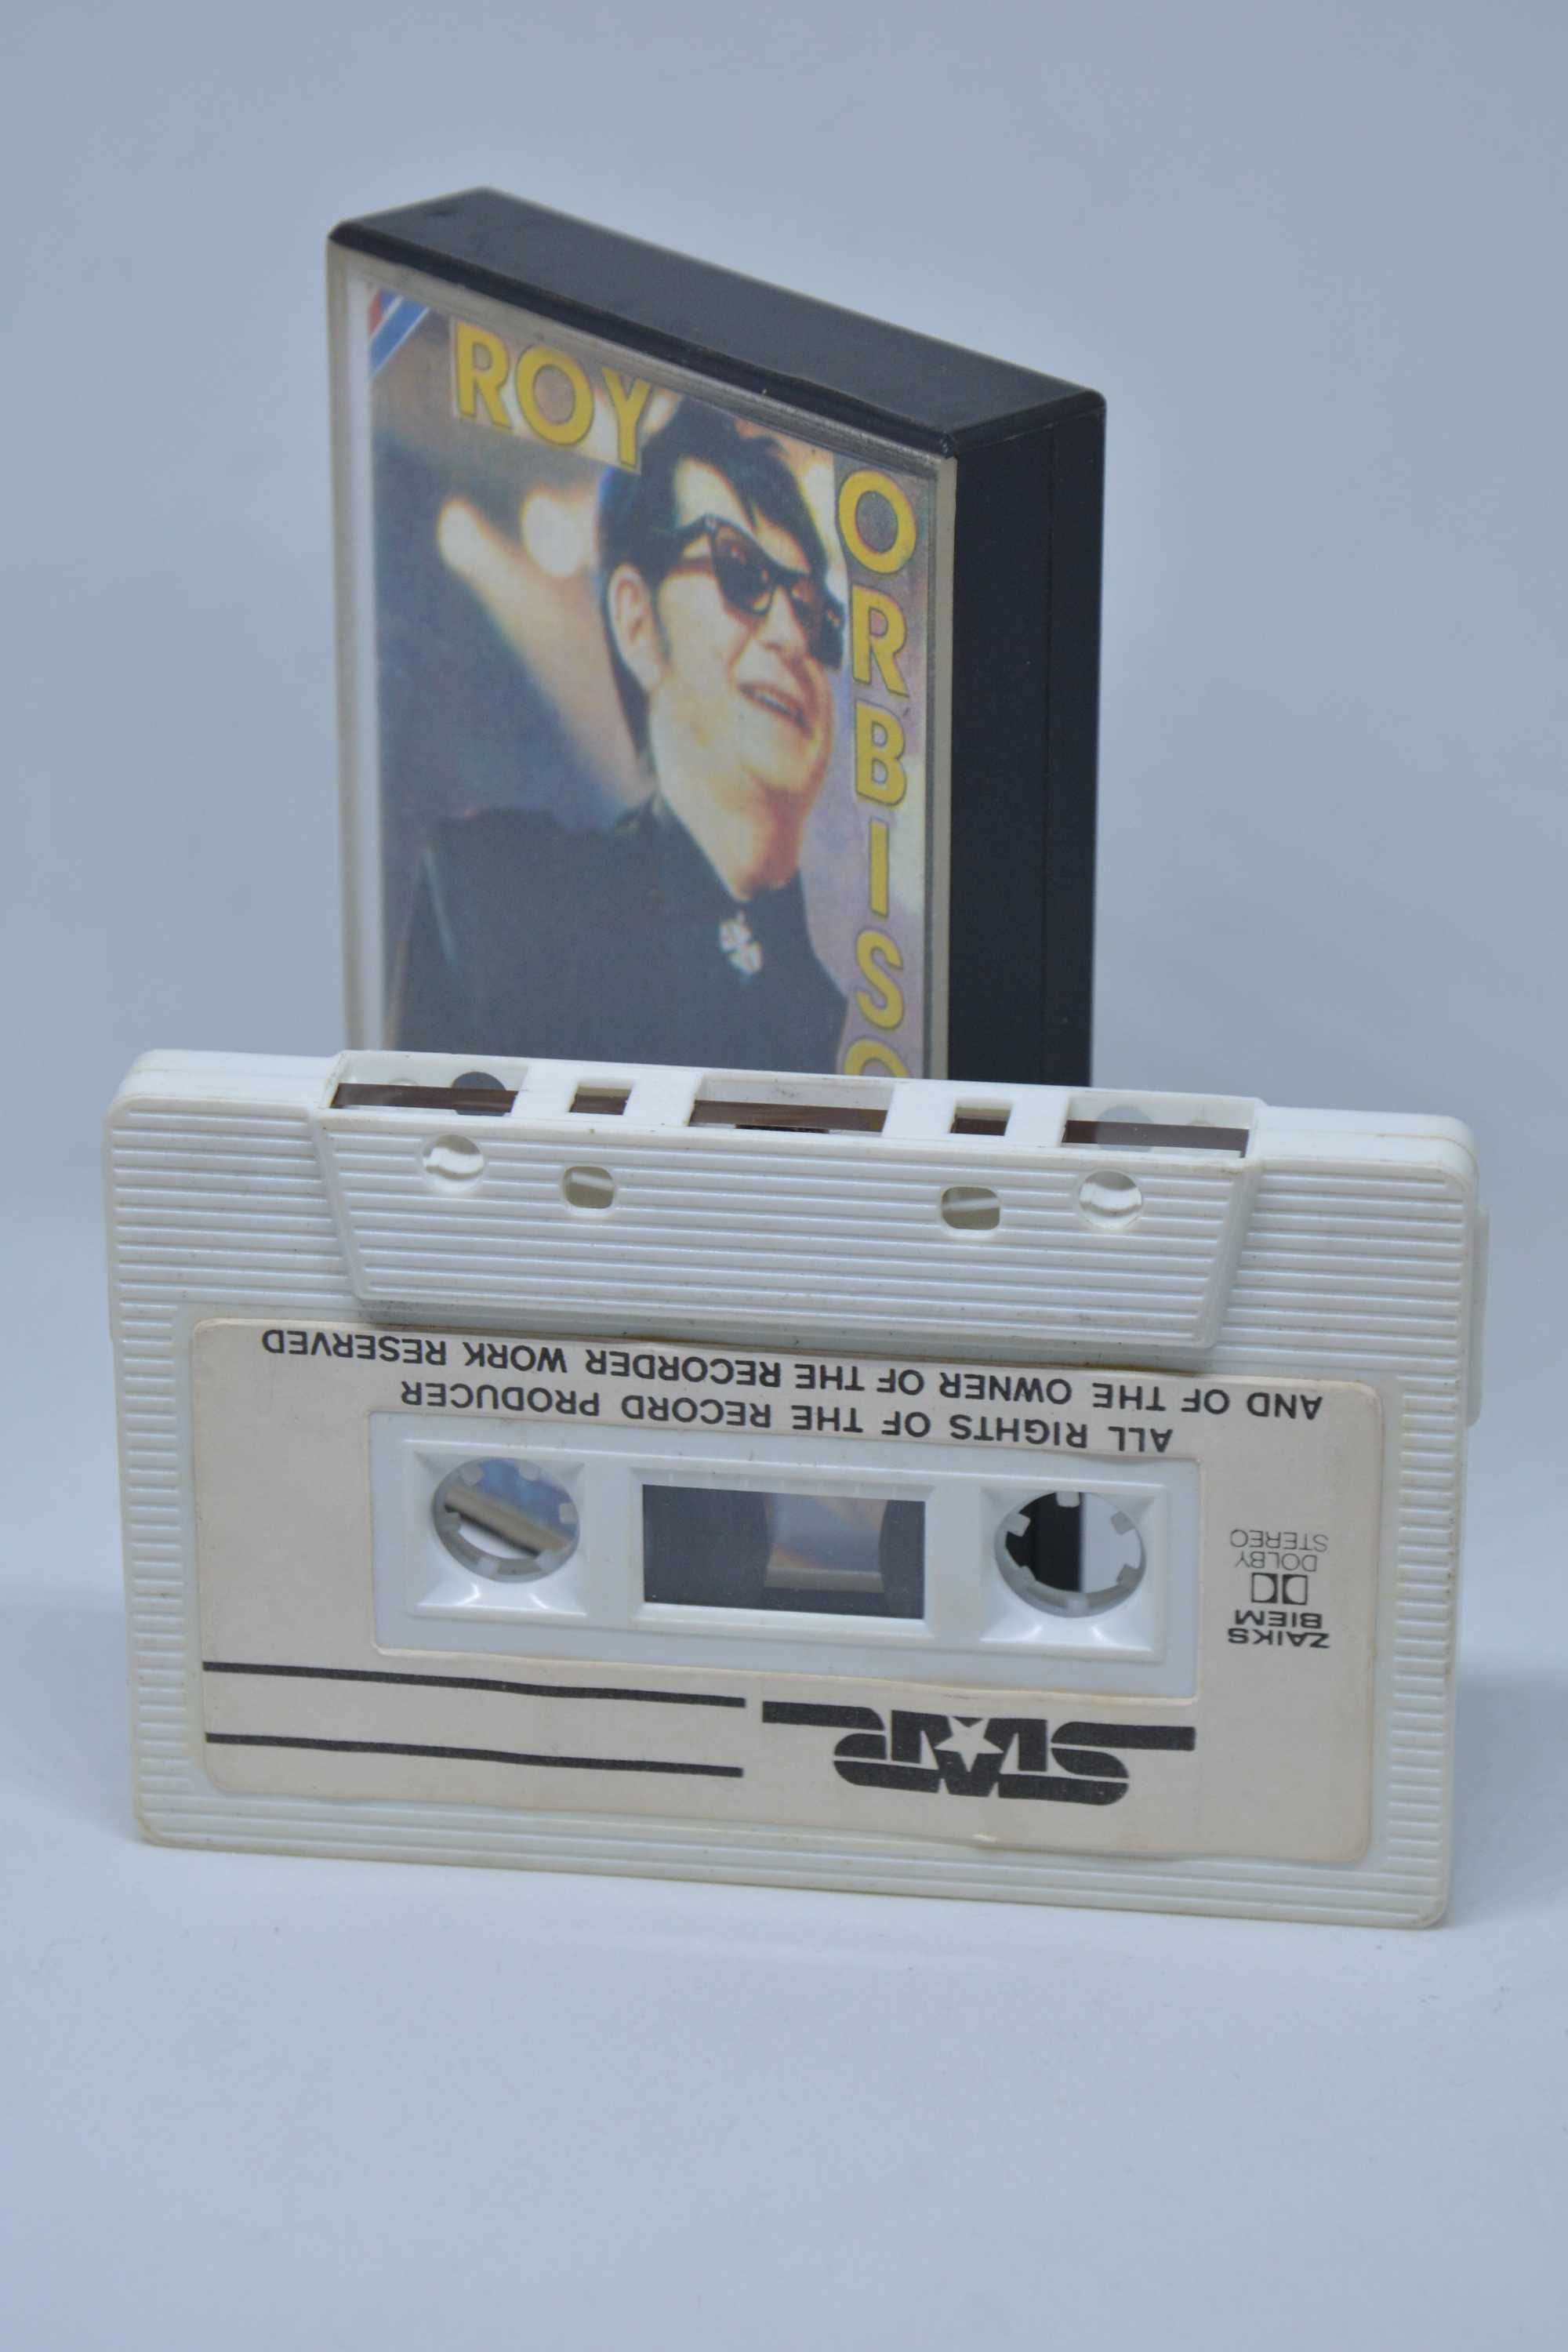 Roy Orbison dolby stereo kaseta